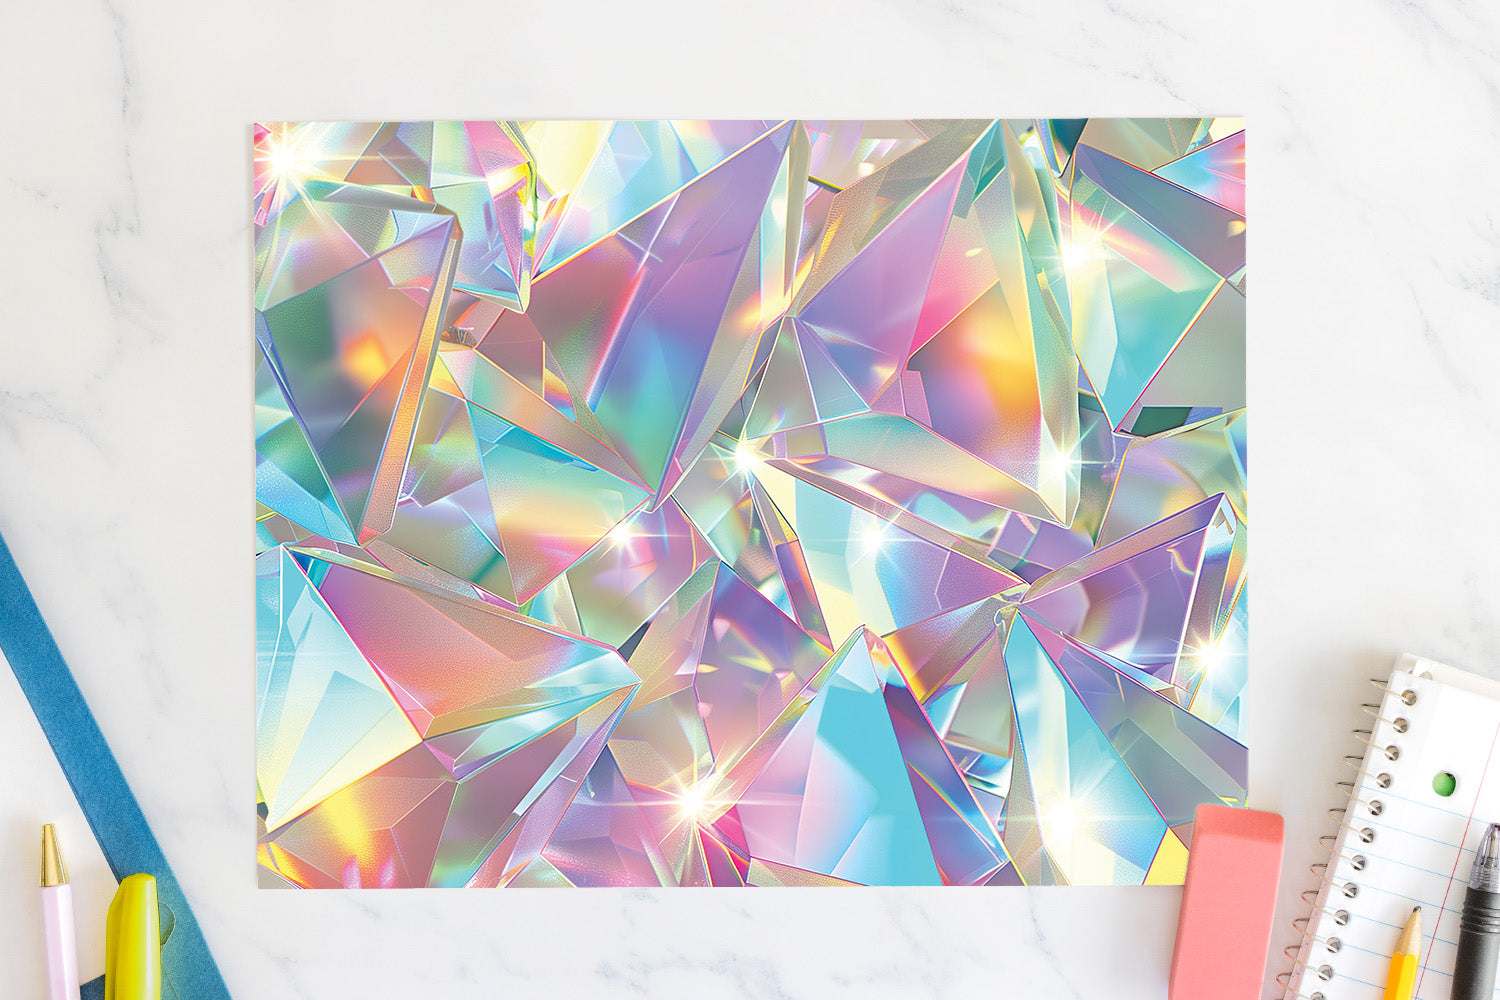 Holographic Crystal 20 oz Straight Tumbler Wrap JPG